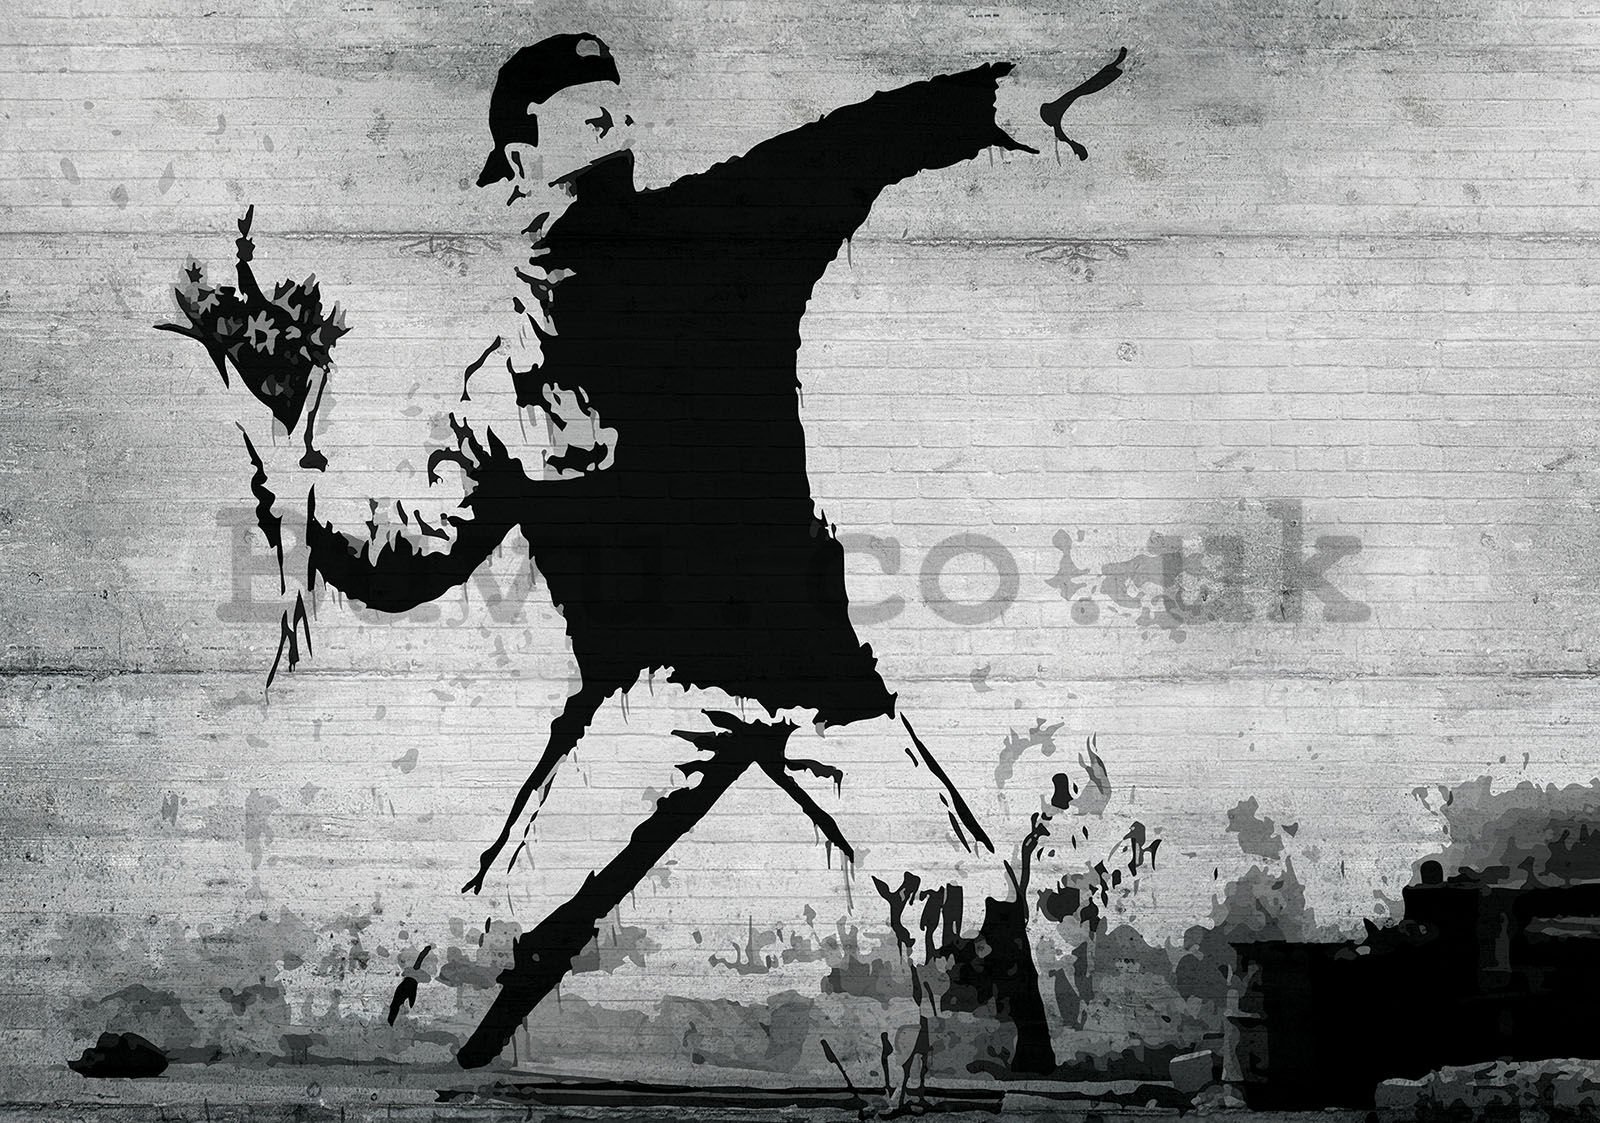 Wall mural vlies: The flower thrower - 416x254 cm